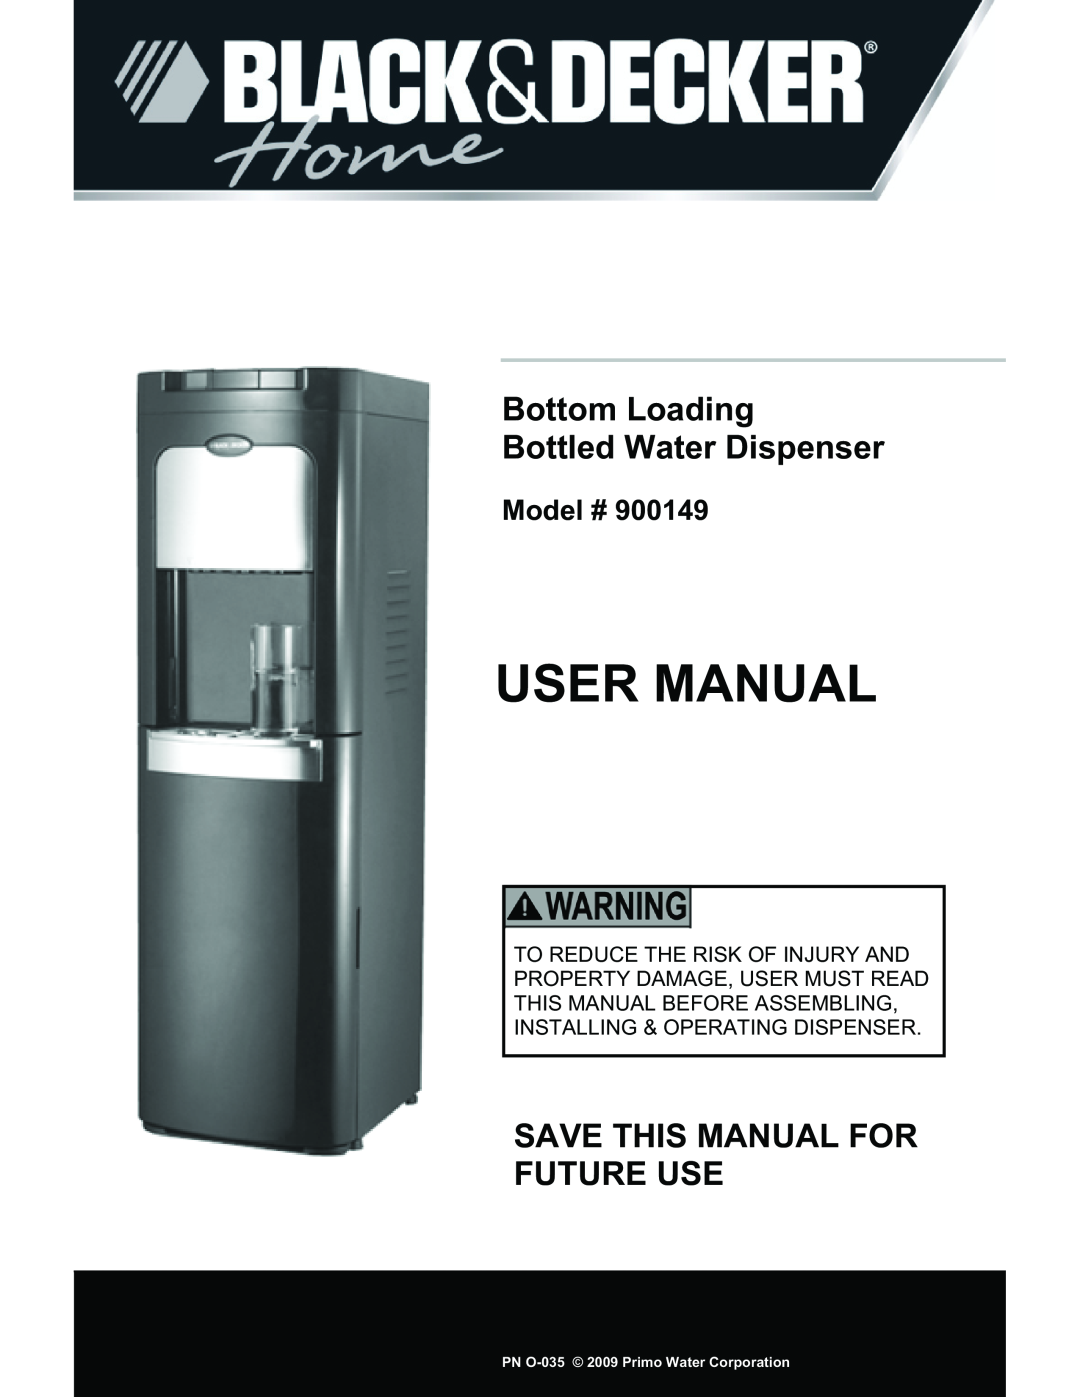 Black & Decker # 900149 user manual Bottom Loading Bottled Water Dispenser, Save This Manual For Future Use, Model # 